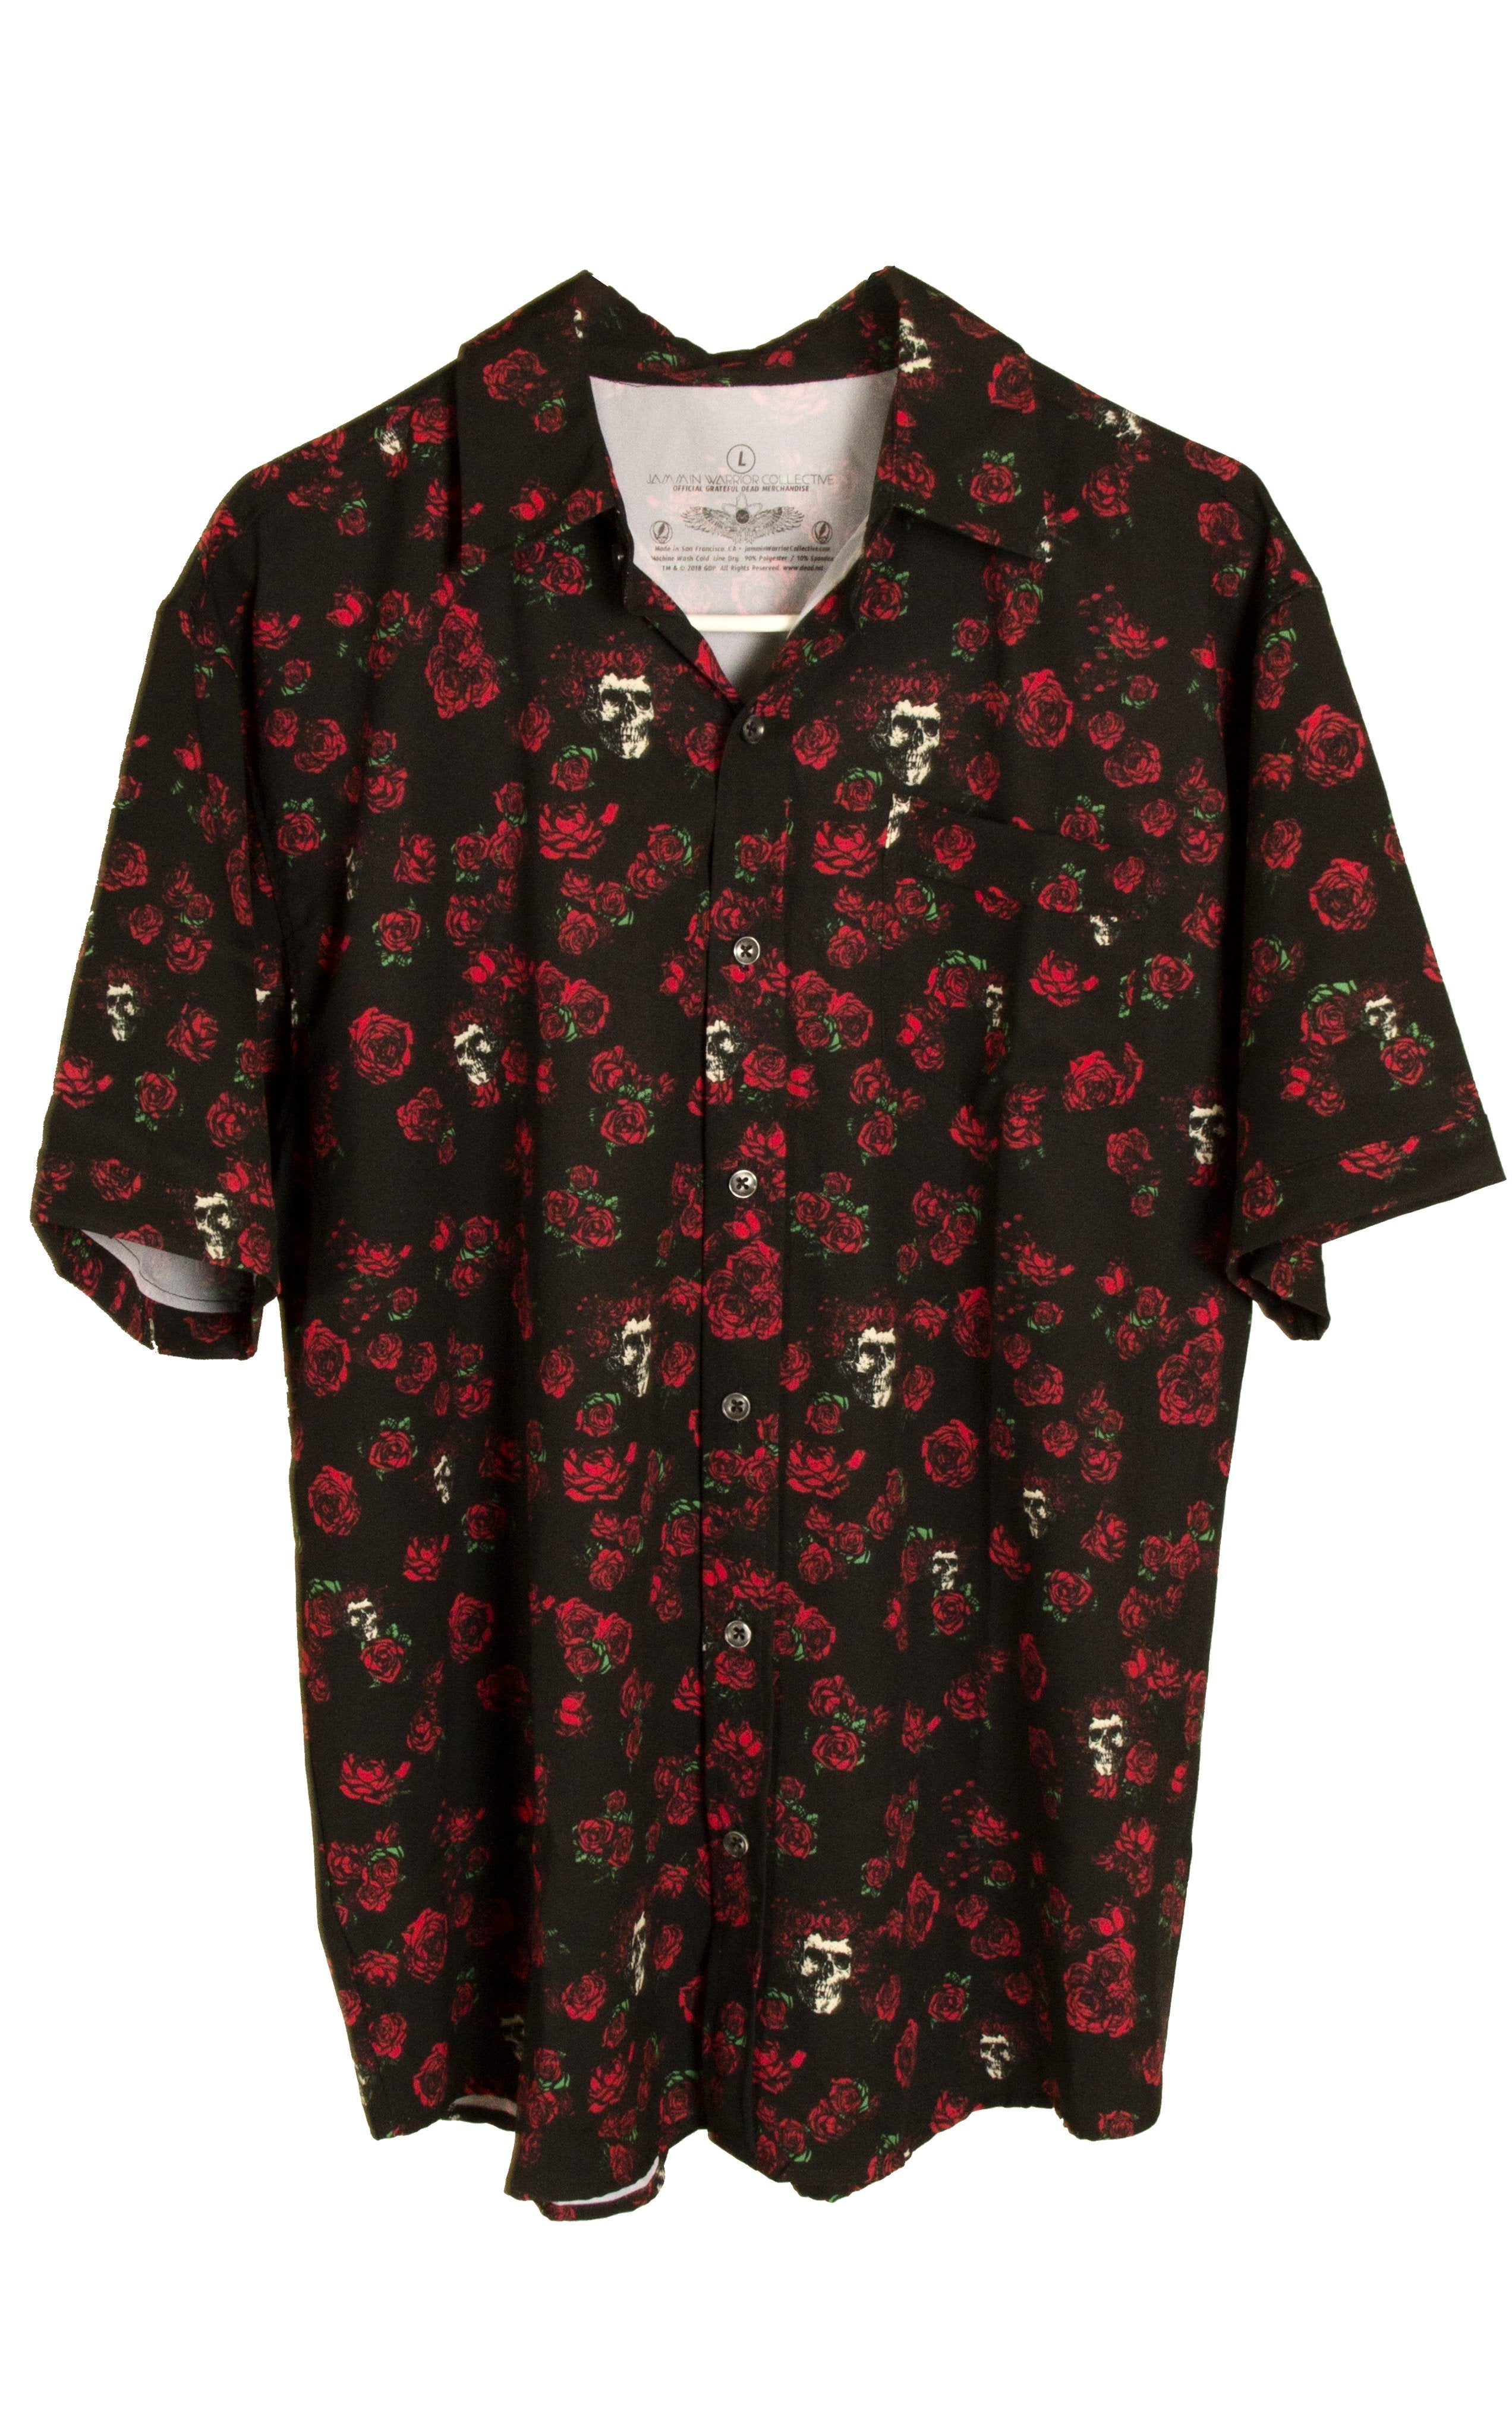 Skull & Roses Grateful Dead Dress Shirt - Warrior Within Designs ,Shirt 